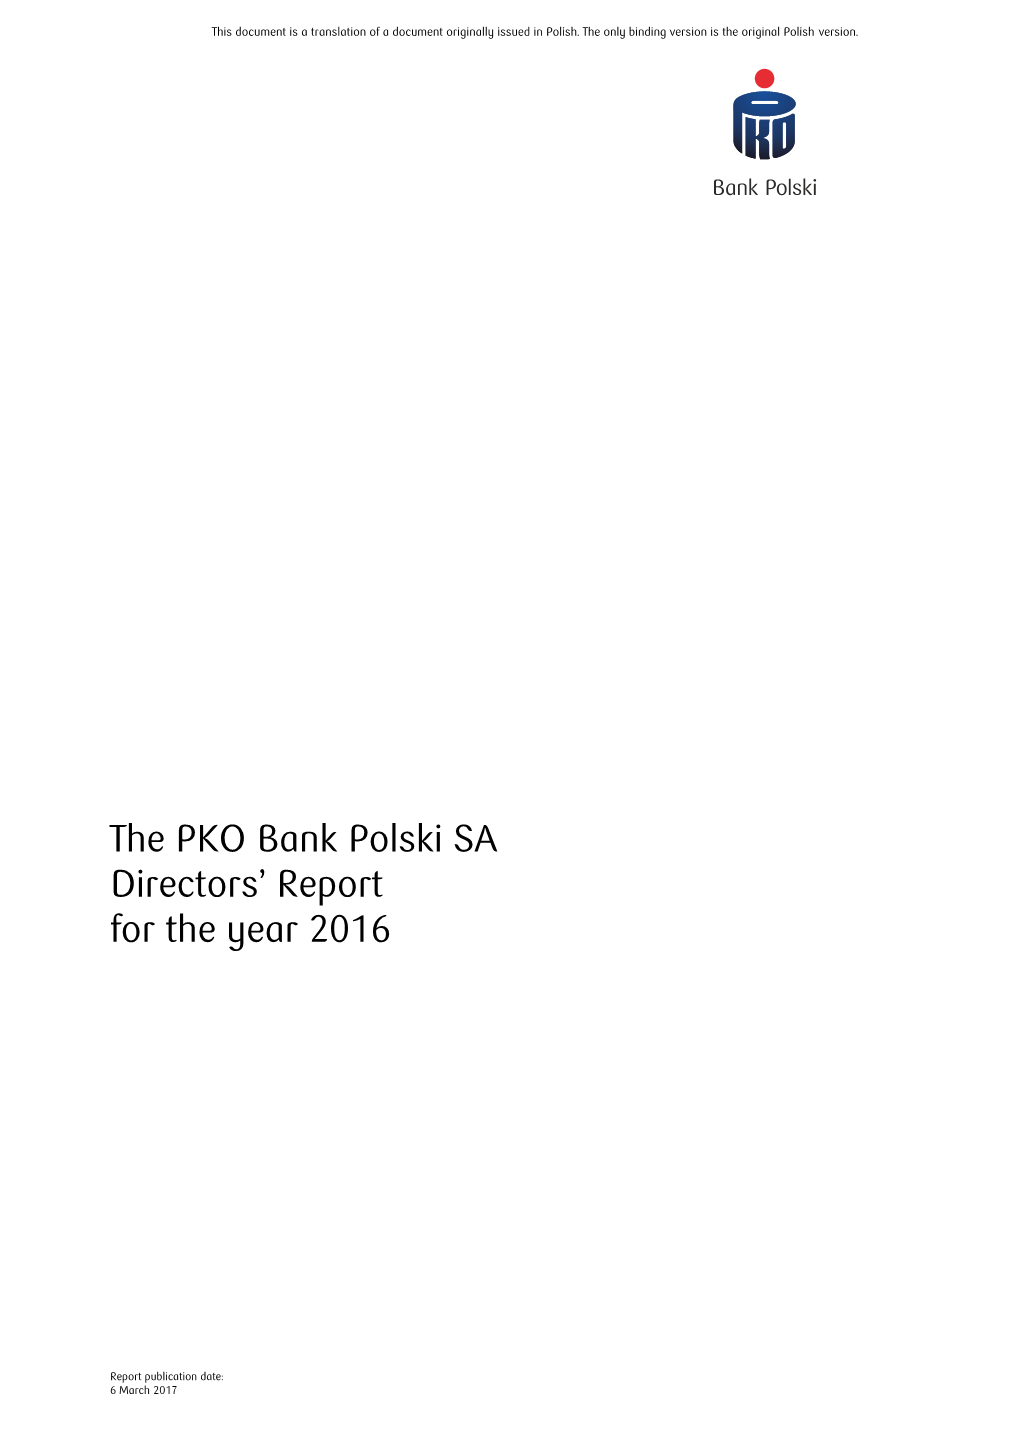 The PKO Bank Polski SA Directors' Report for the Year 2016